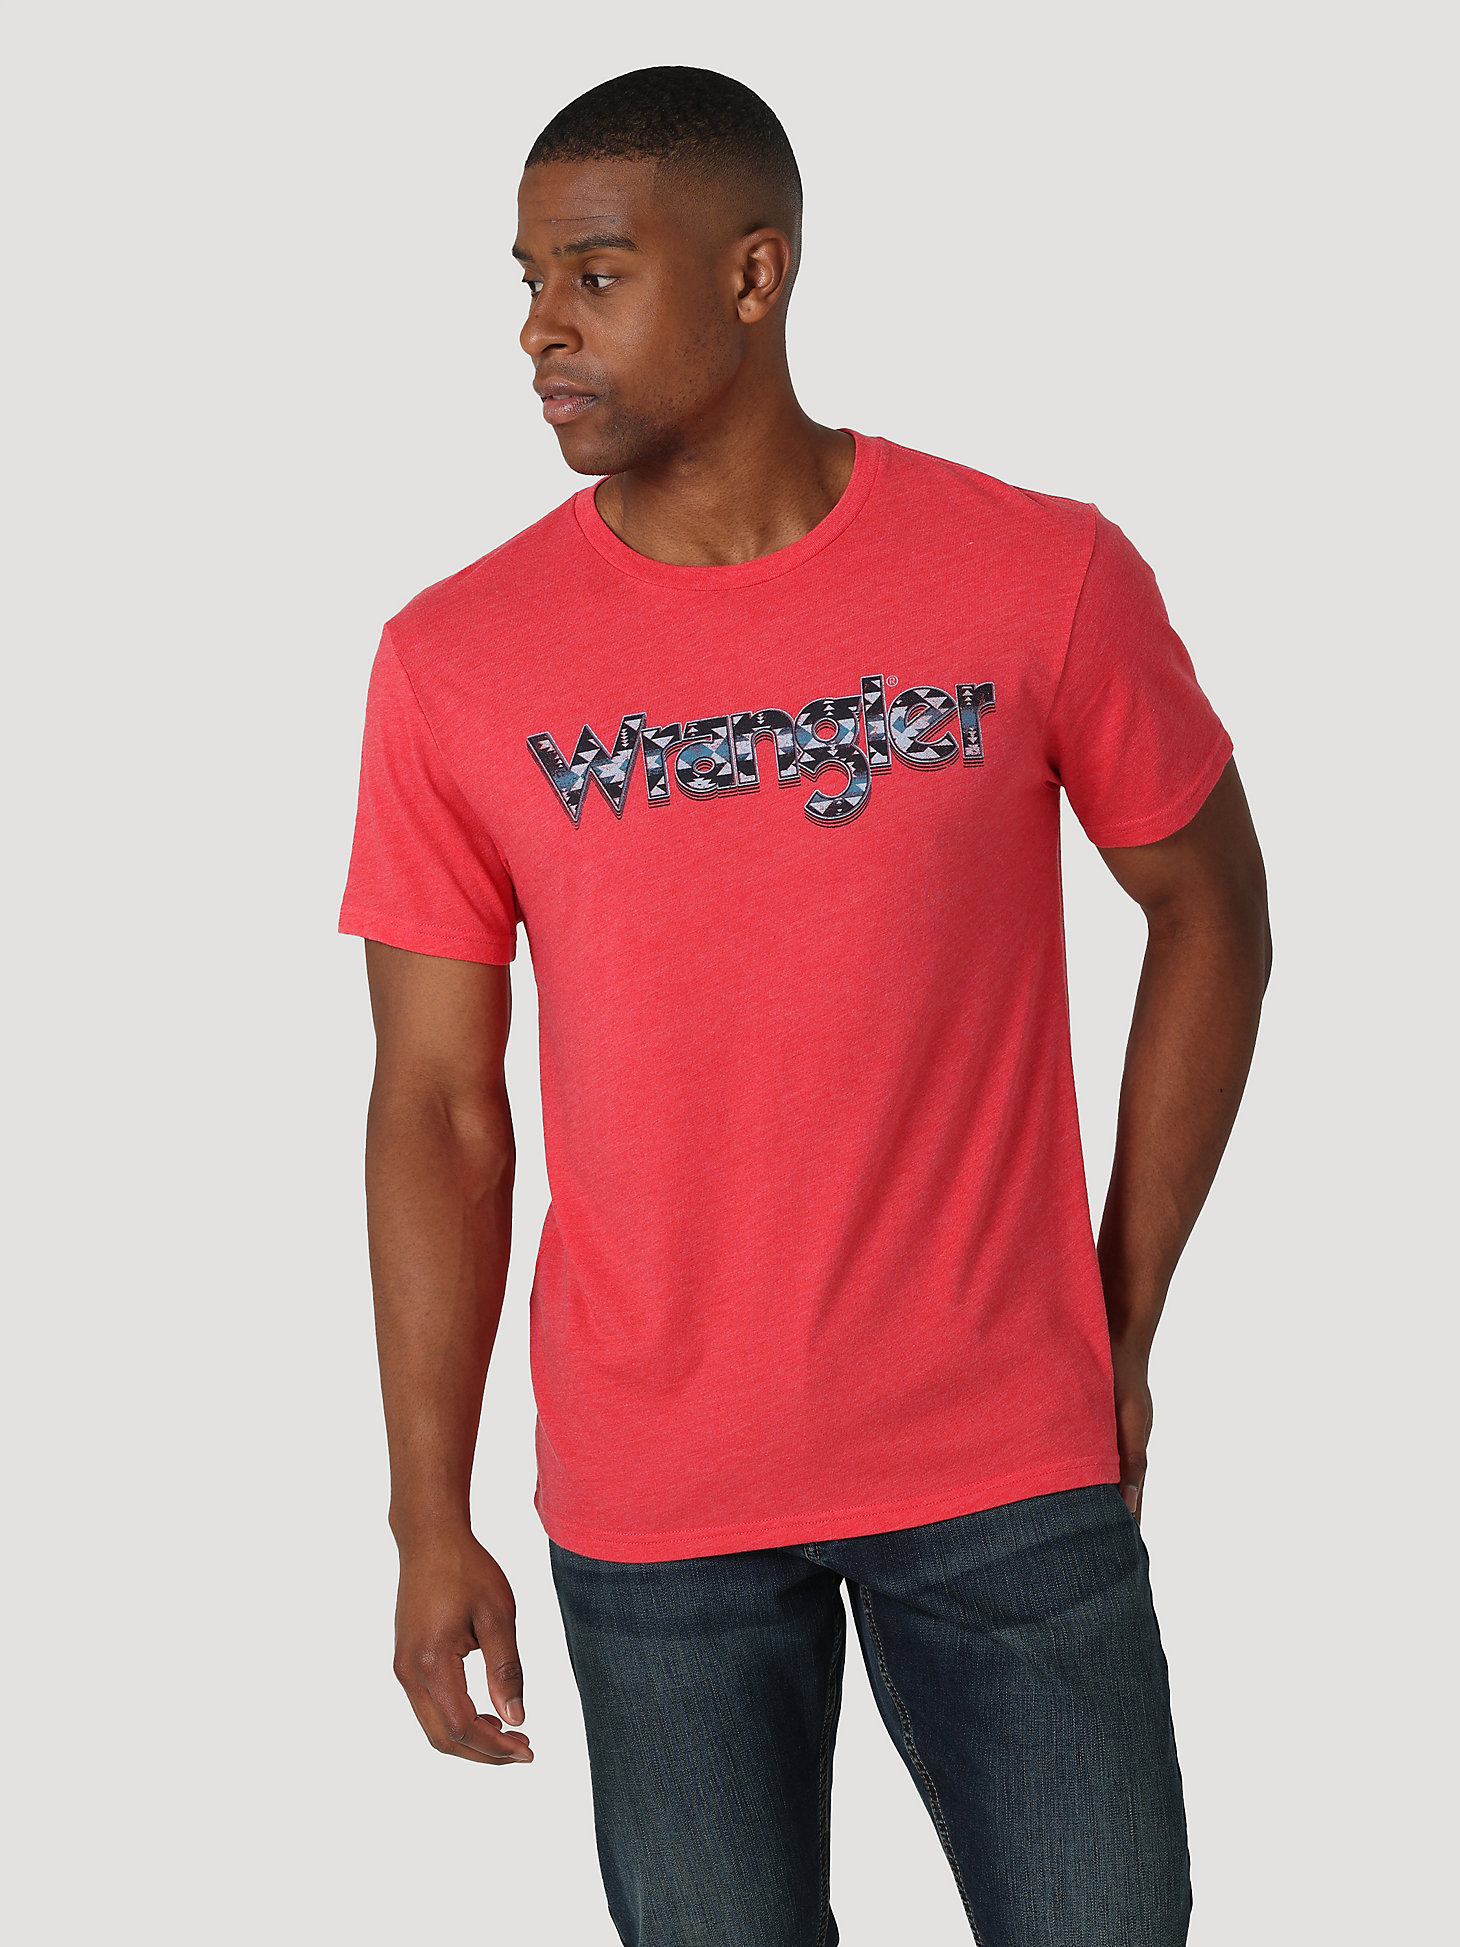 Men's Geo Wrangler Logo T-Shirt in Red Heather main view